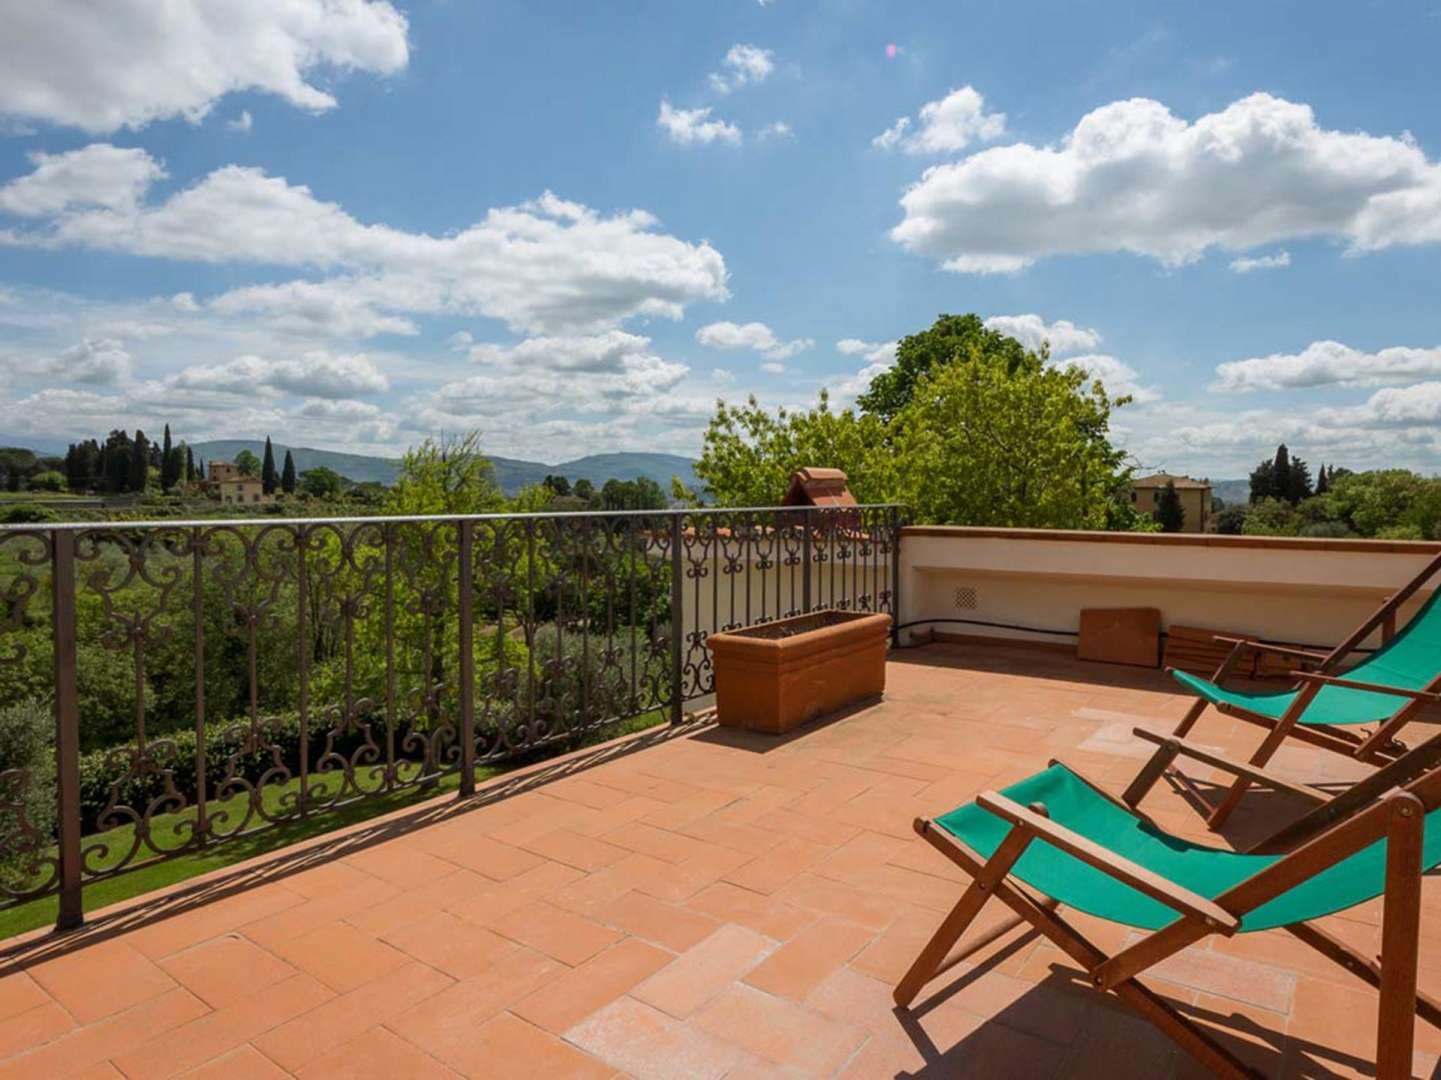 8 Bedroom Villa For Sale Villa Fiorenzia Lp04995 67197f94b914300.jpg